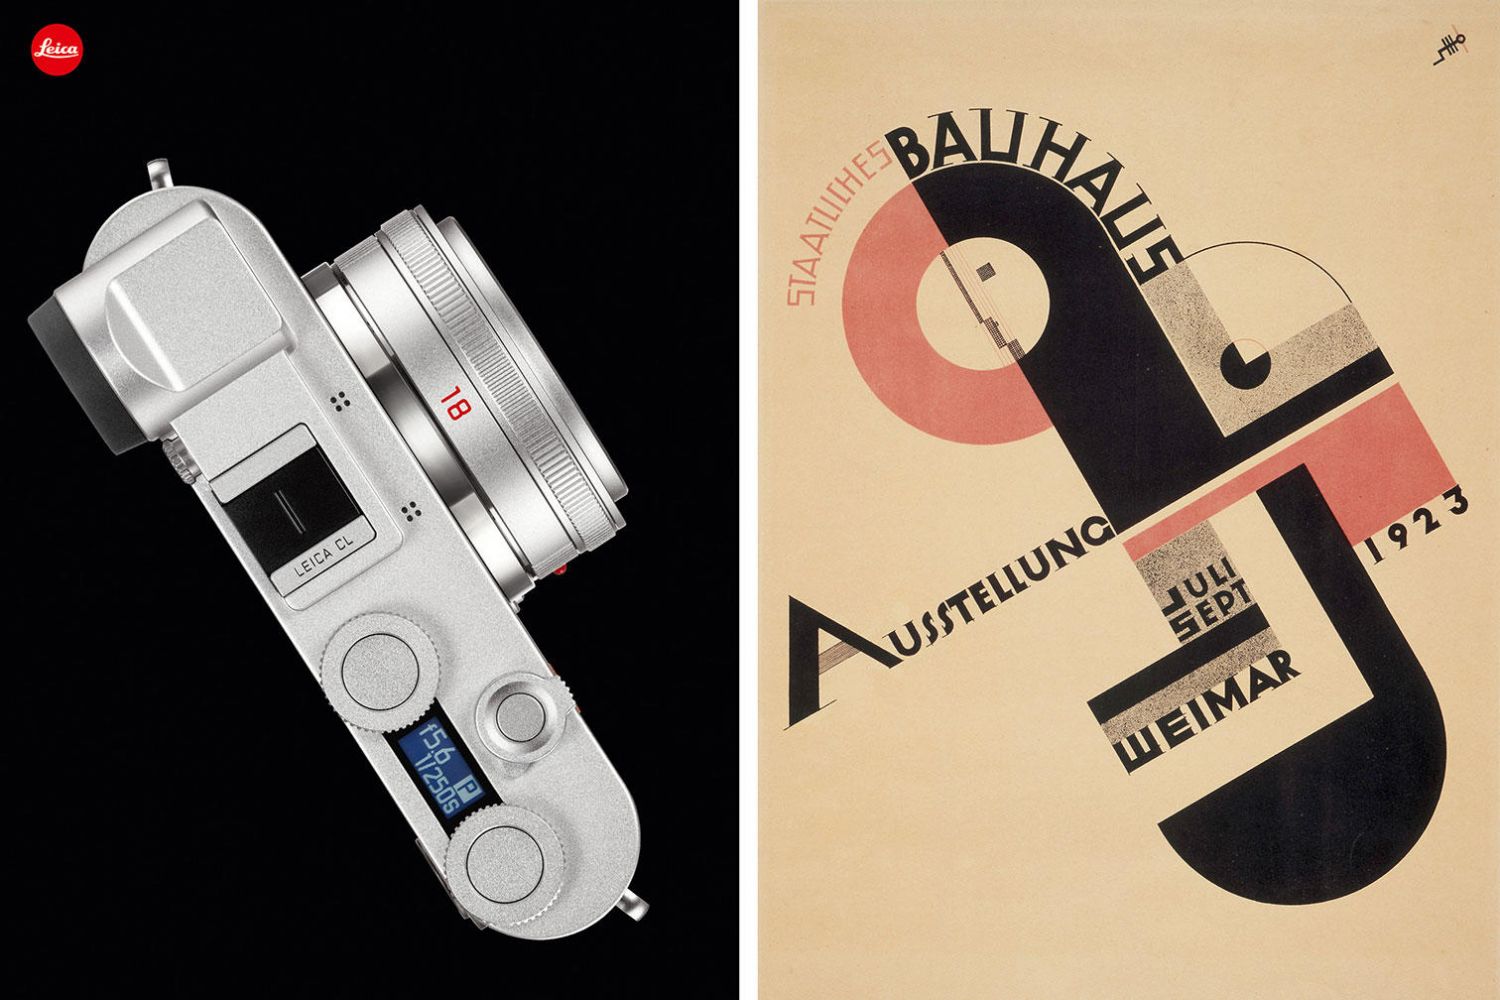 Leica CL, Limited Edition 3, Bauhaus